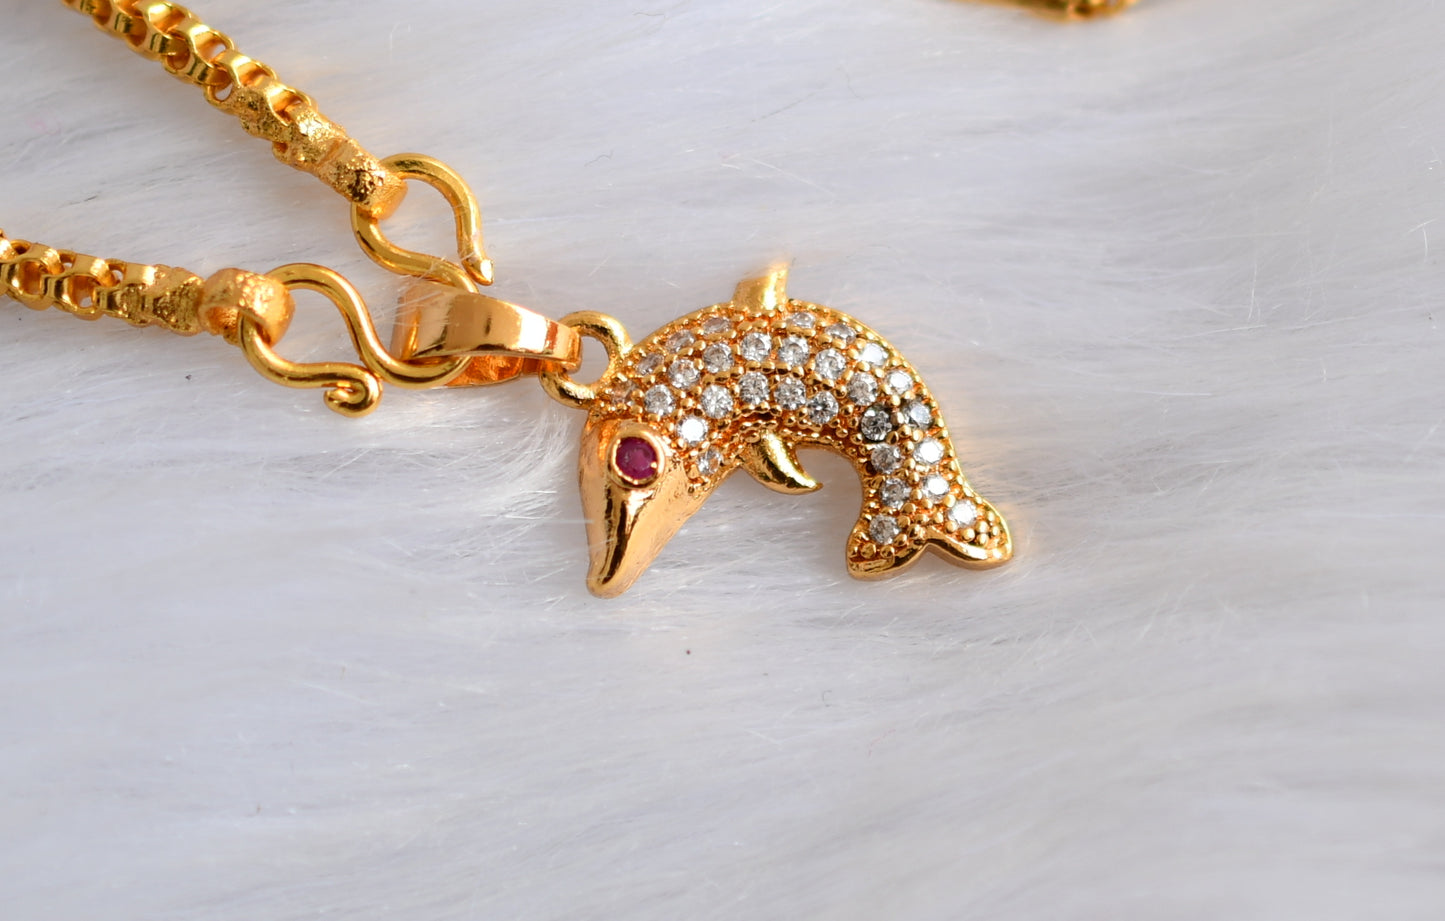 Gold tone white fish pendant with chain dj-39405